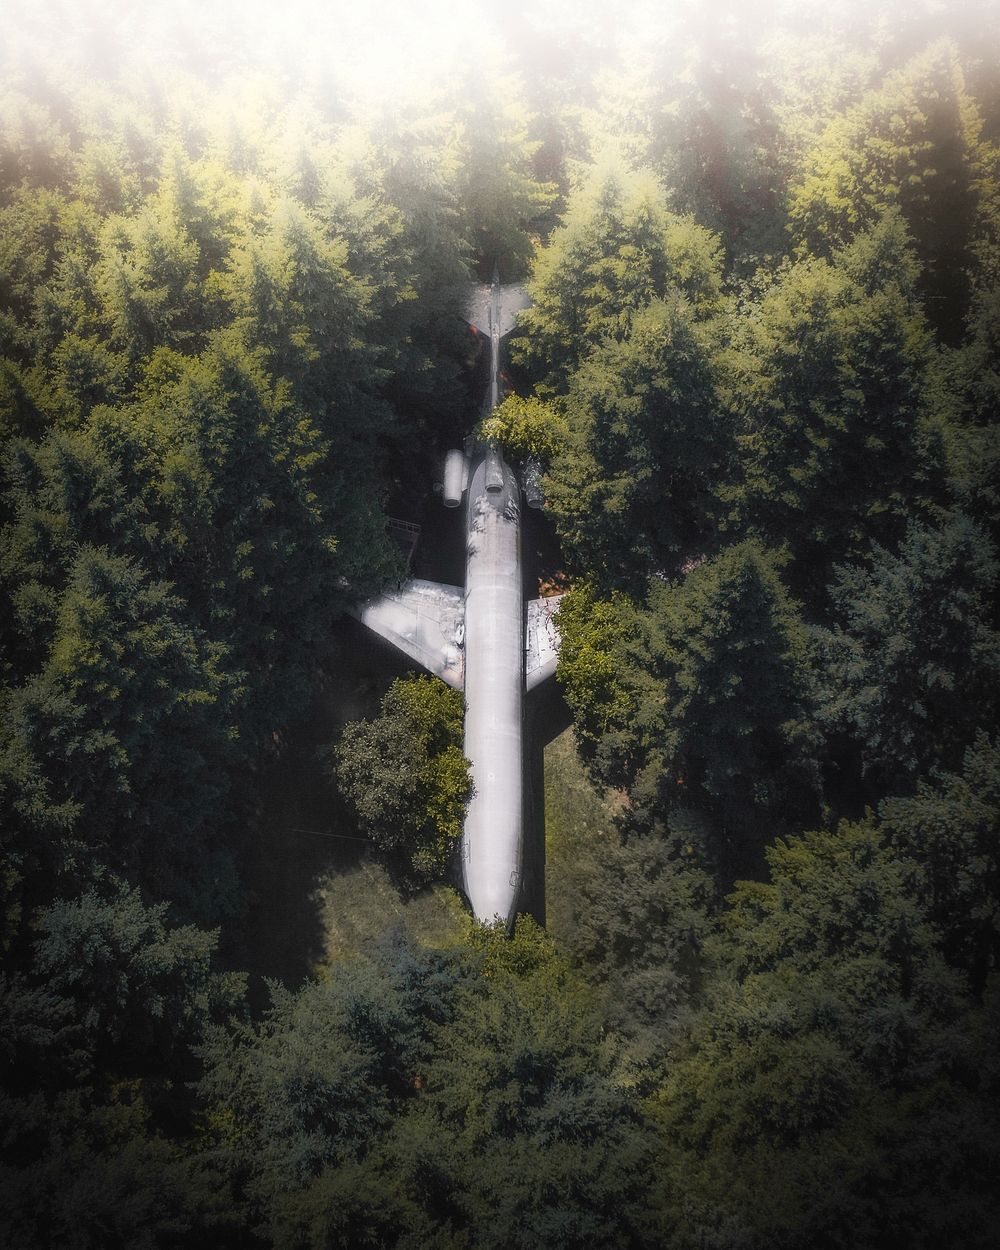 A plane in the woods in Hillsboro, Oregon, USA